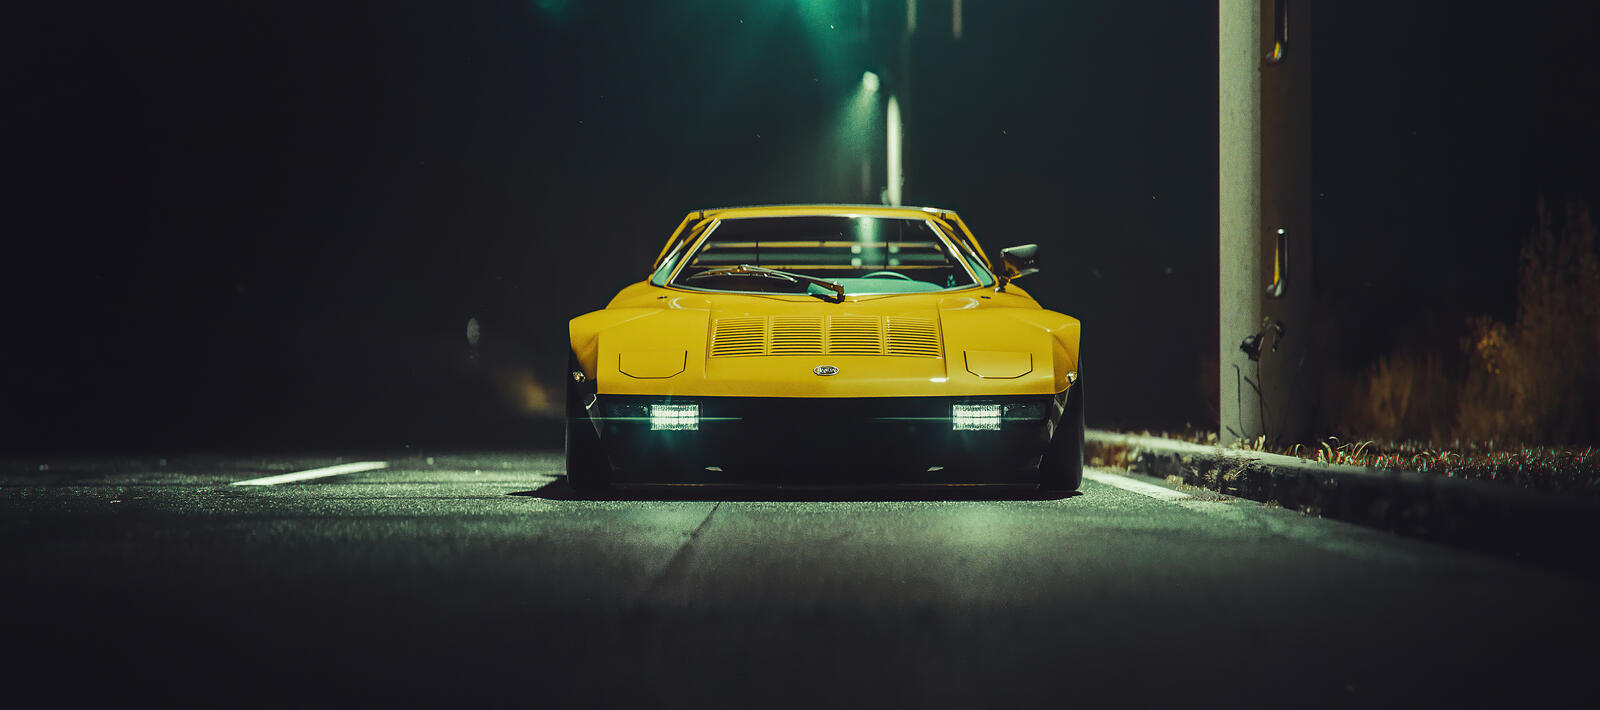 Free photo Yellow Mazda RX7 at night under a streetlight